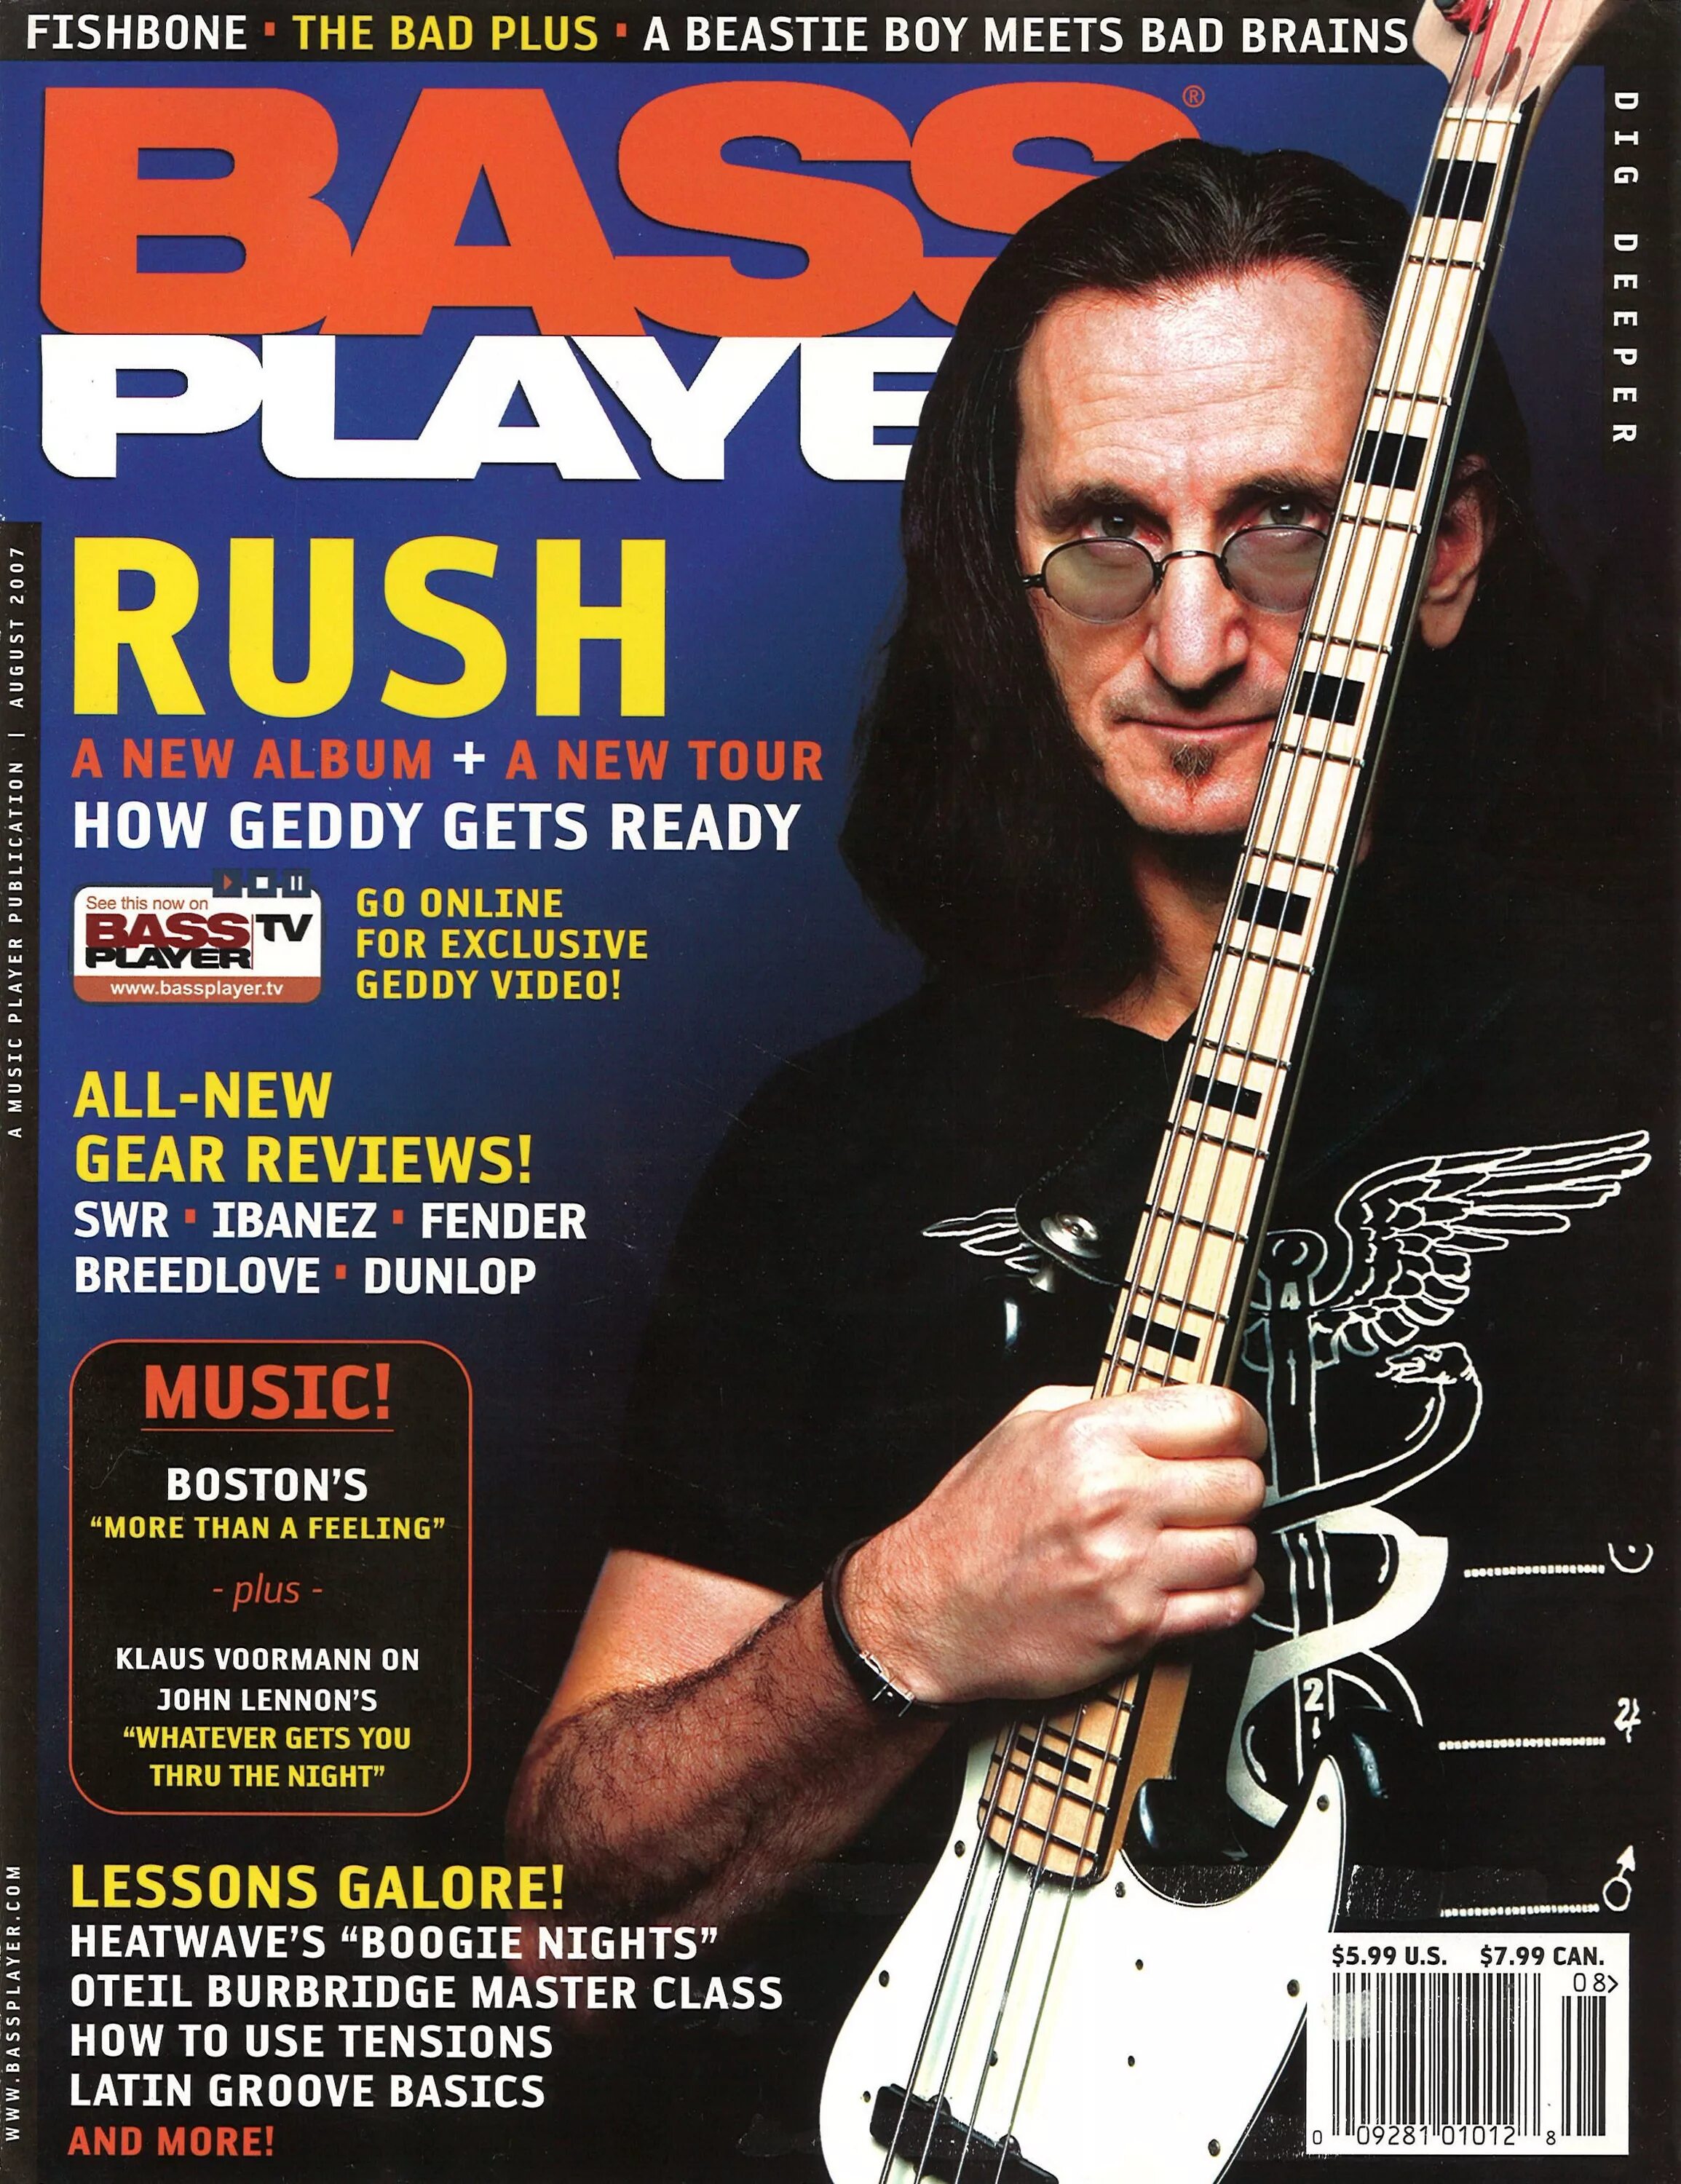 Bass Magazine журнал. Players журнал. Bass Player журналы. Rush bassist. Bass player